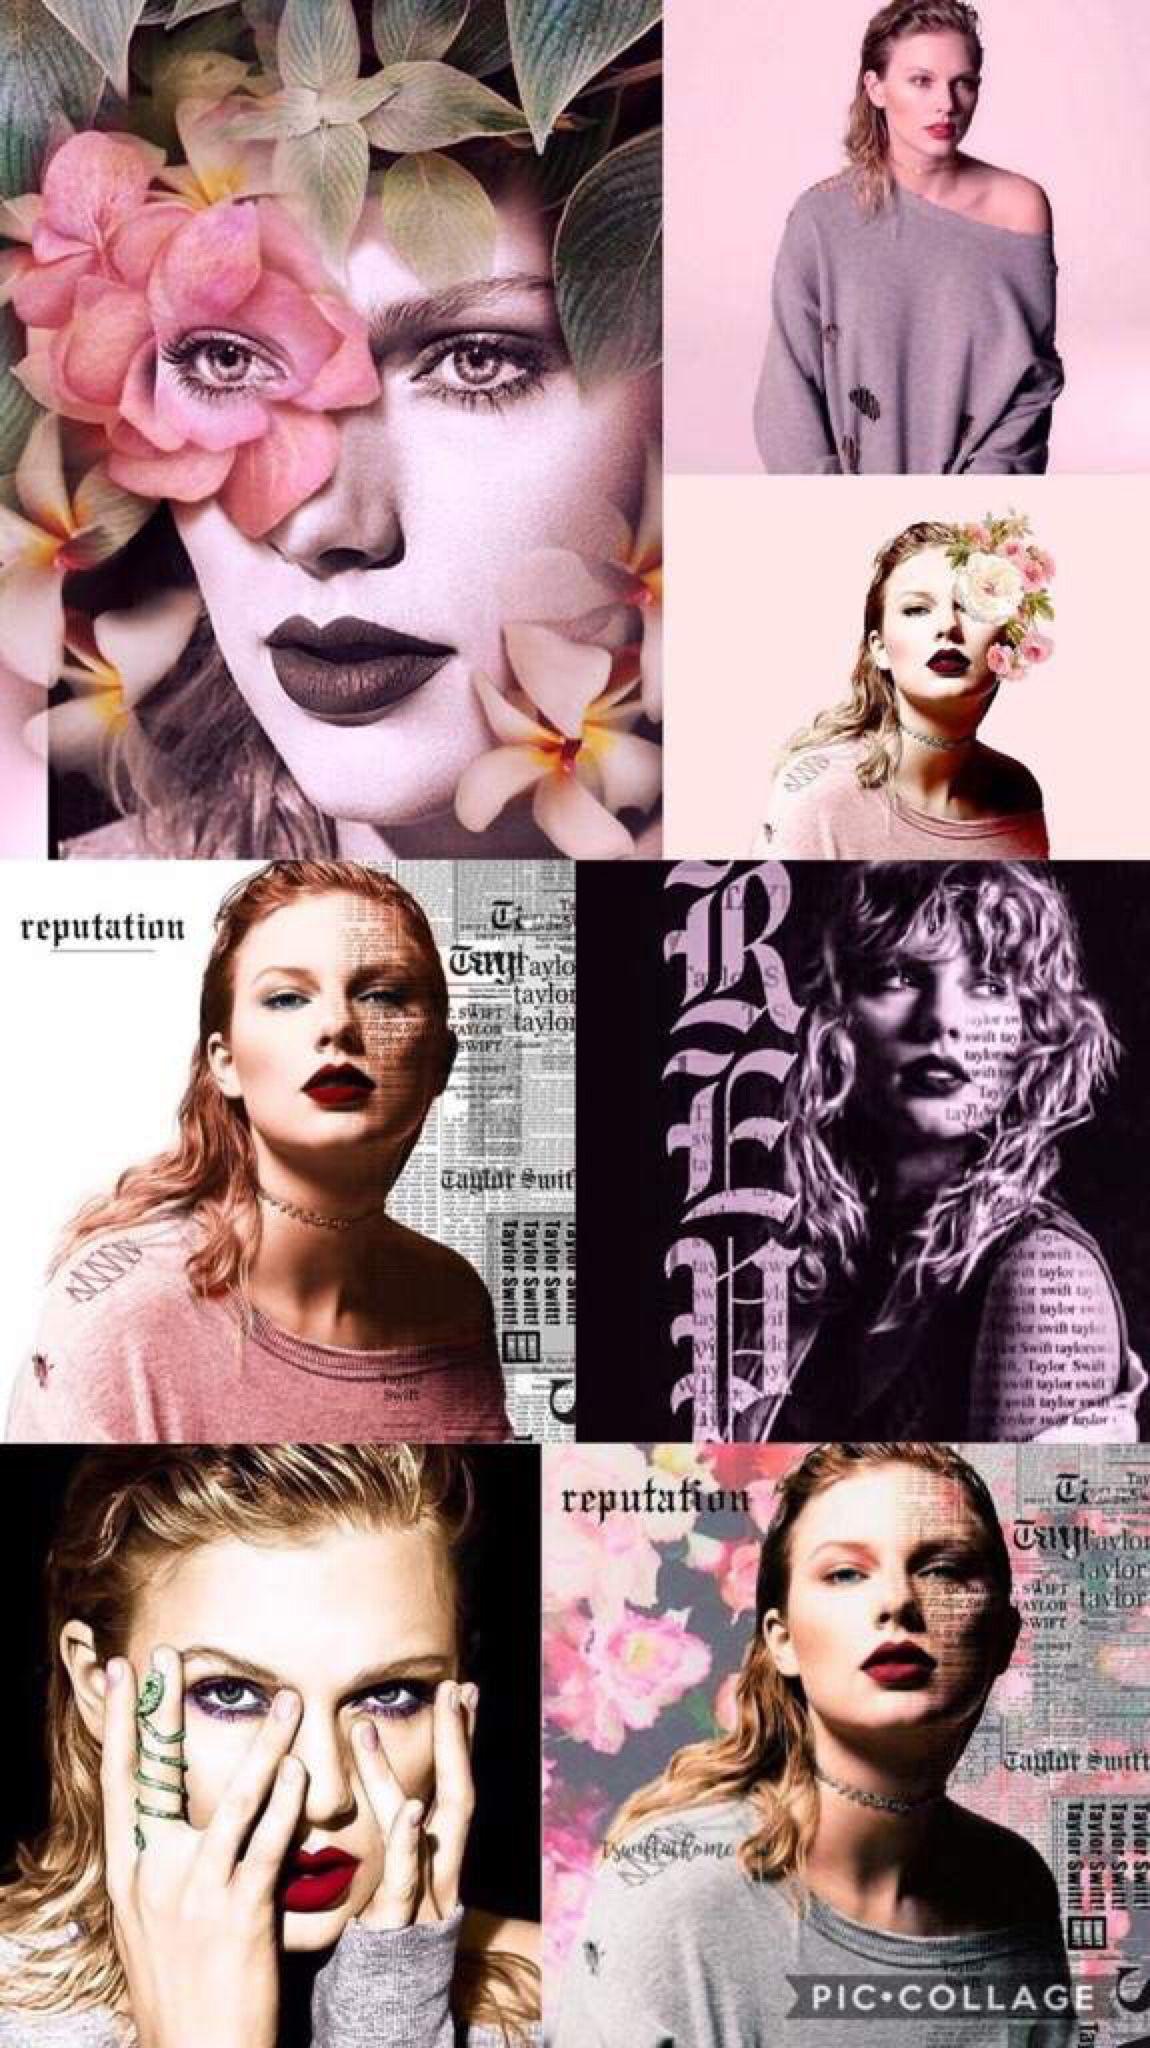 I LOVE THIS. big reputation. Taylor swift wallpaper